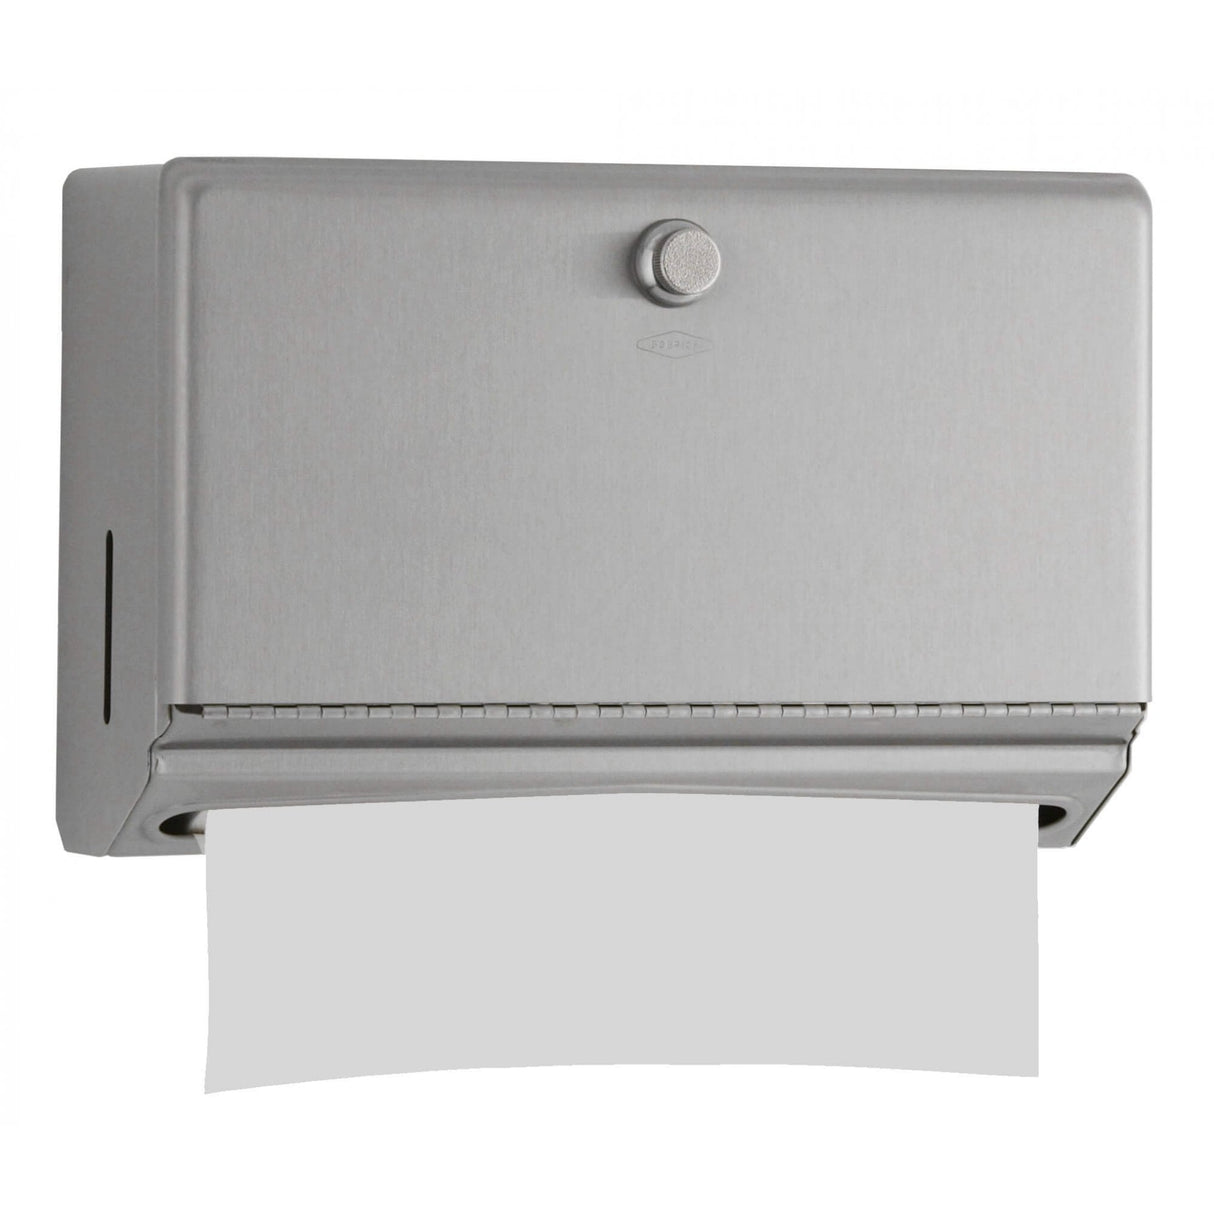 B-2621 Mini Paper Towel Dispenser